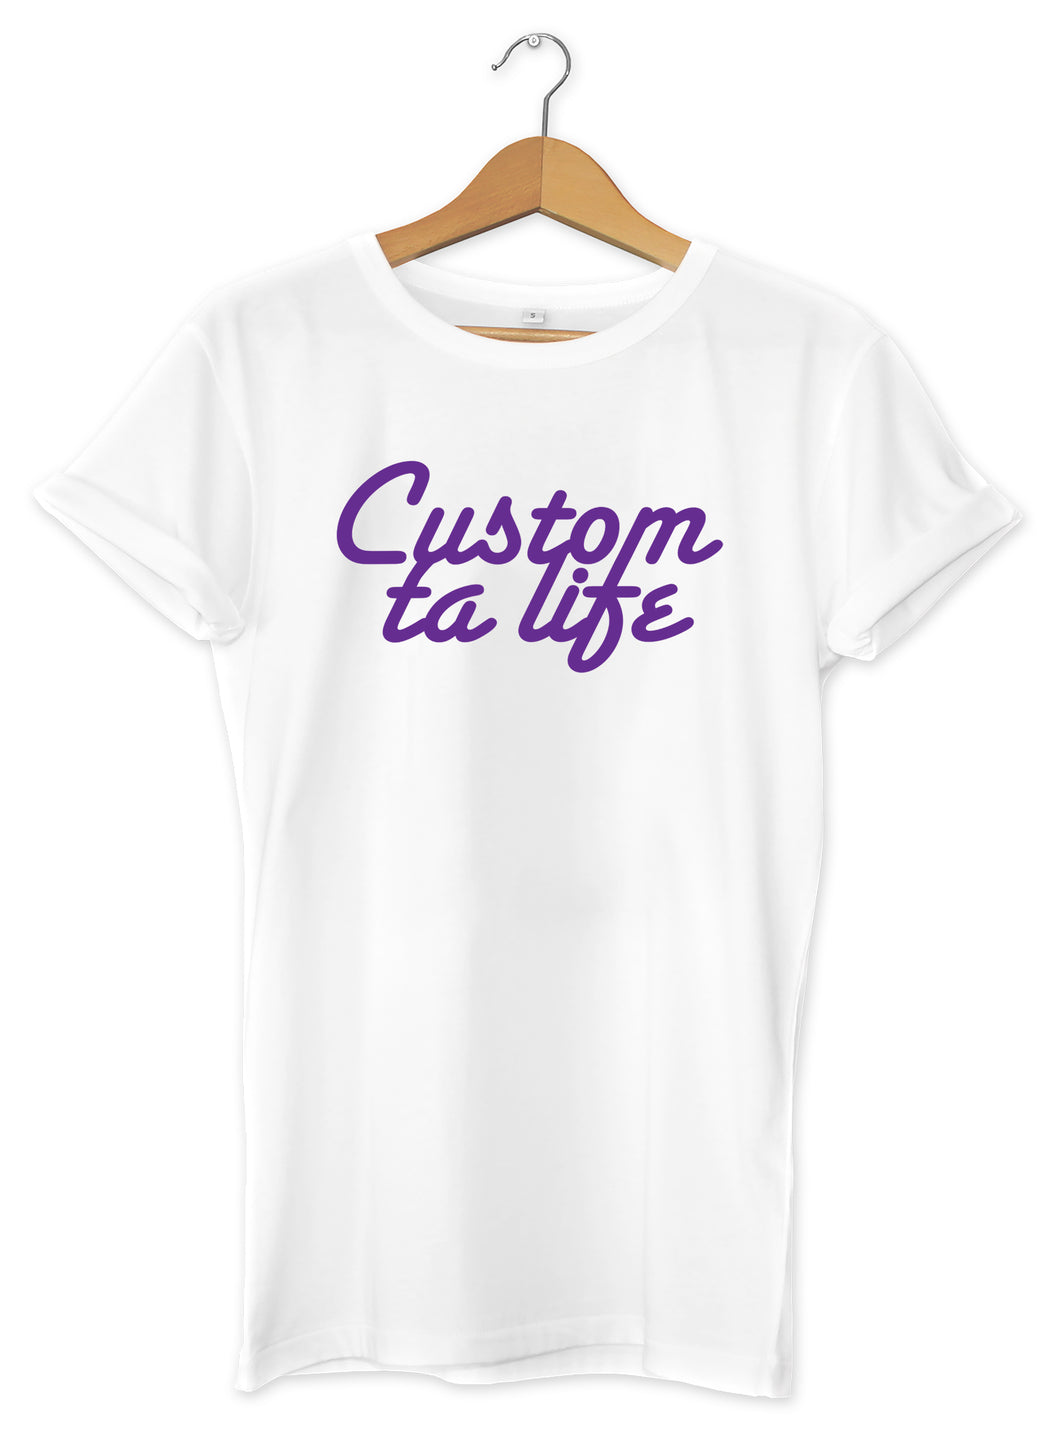  t-shirt original  cool motivation So Custom Custom ta life 